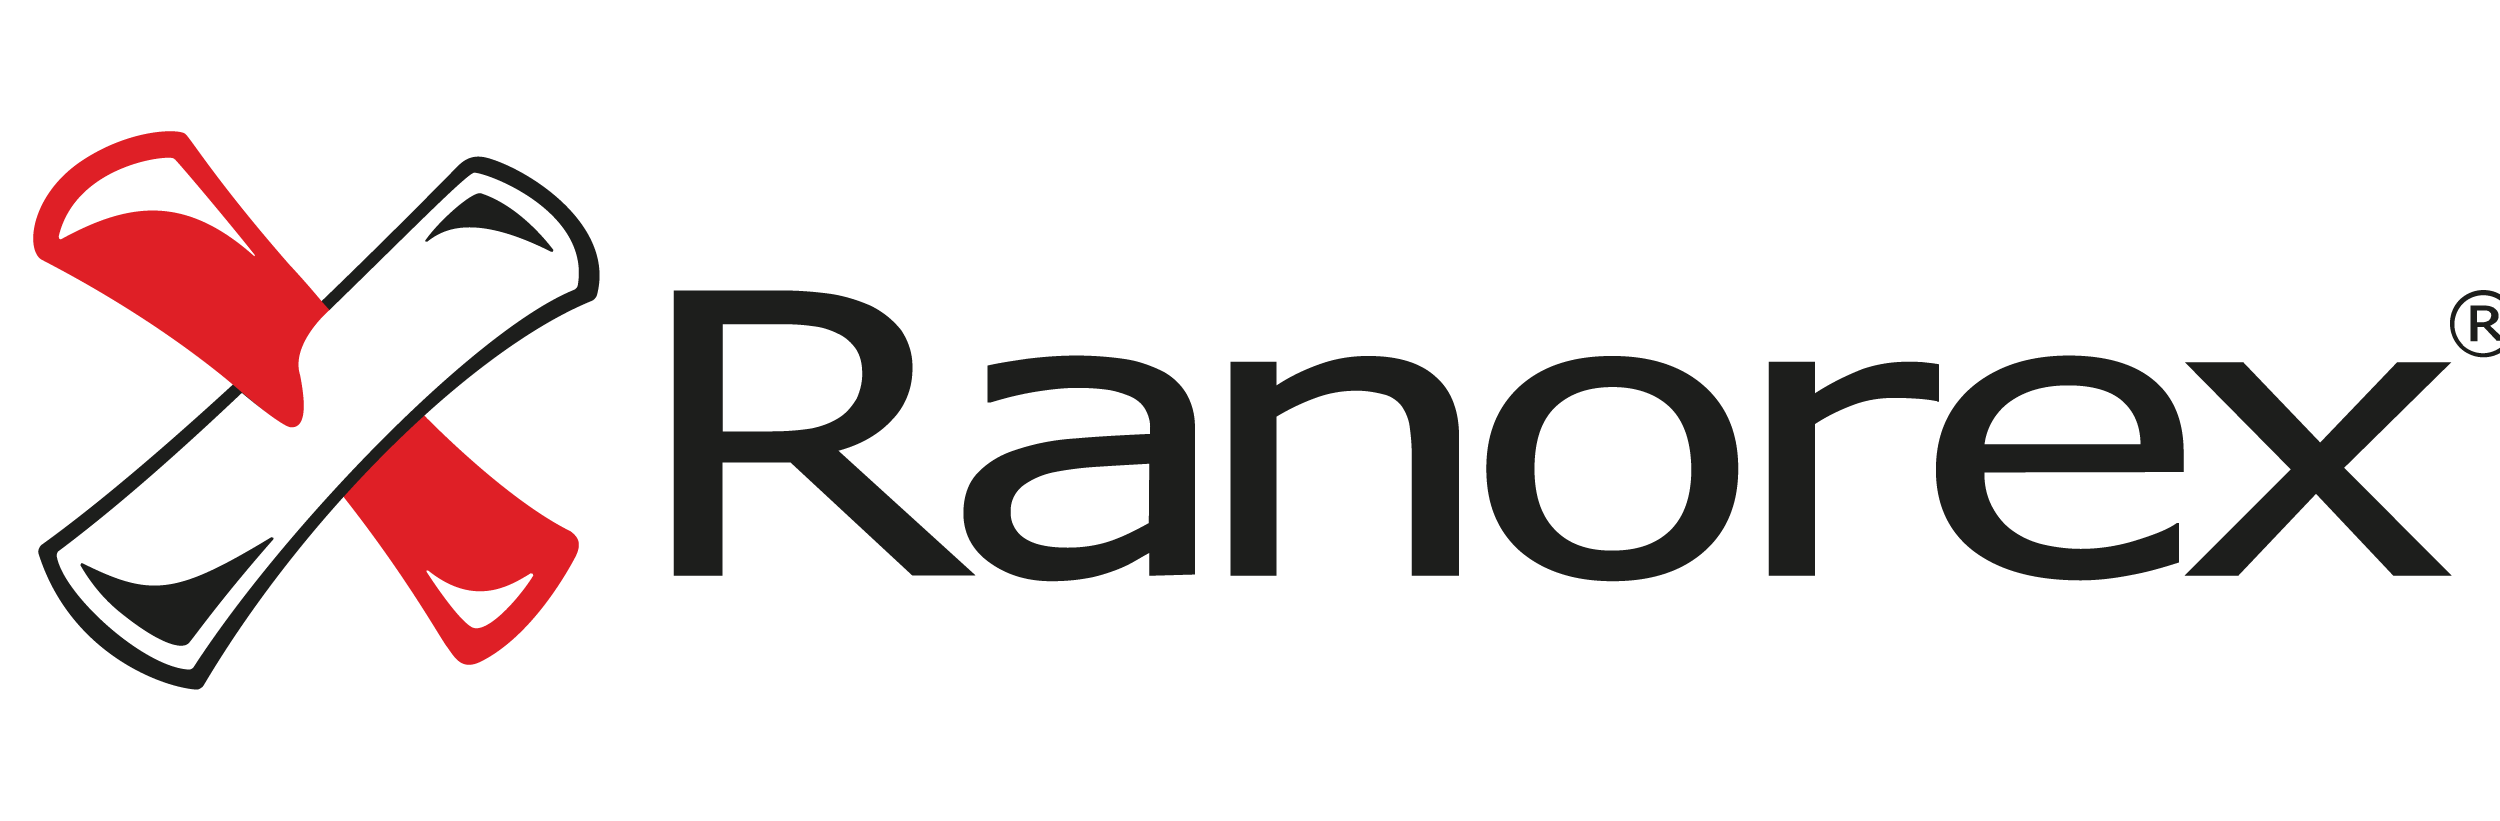 Ranorex - test automation framework - itviec blog